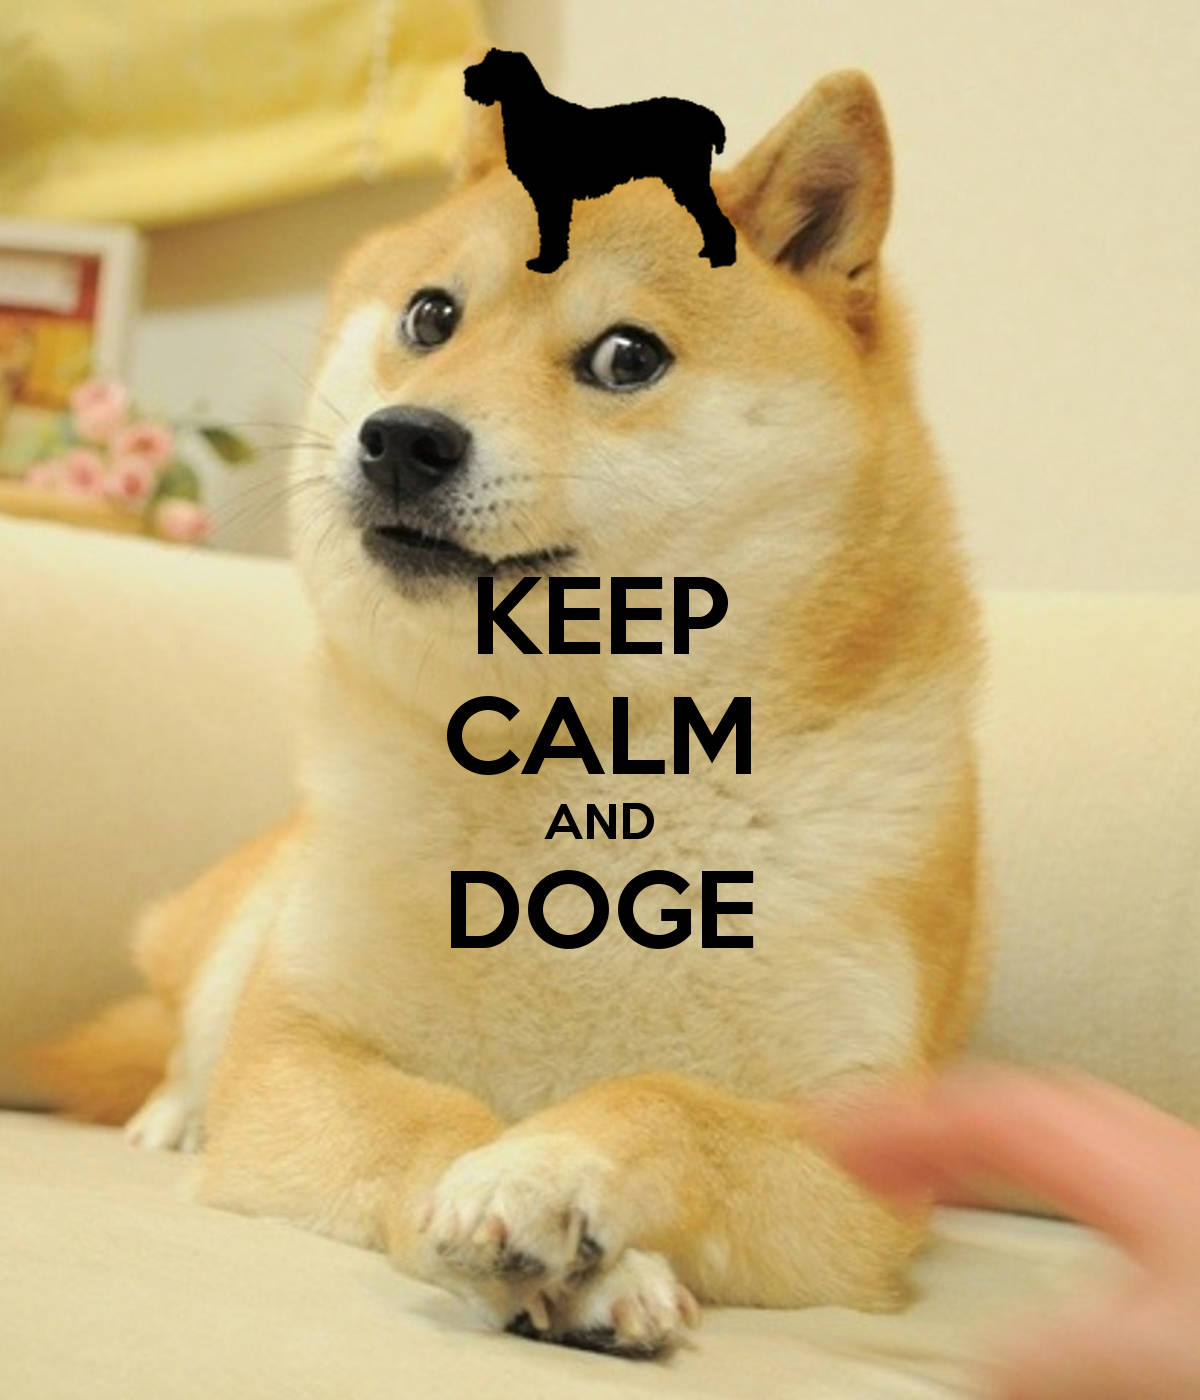 Keep Calm And Doge Meme